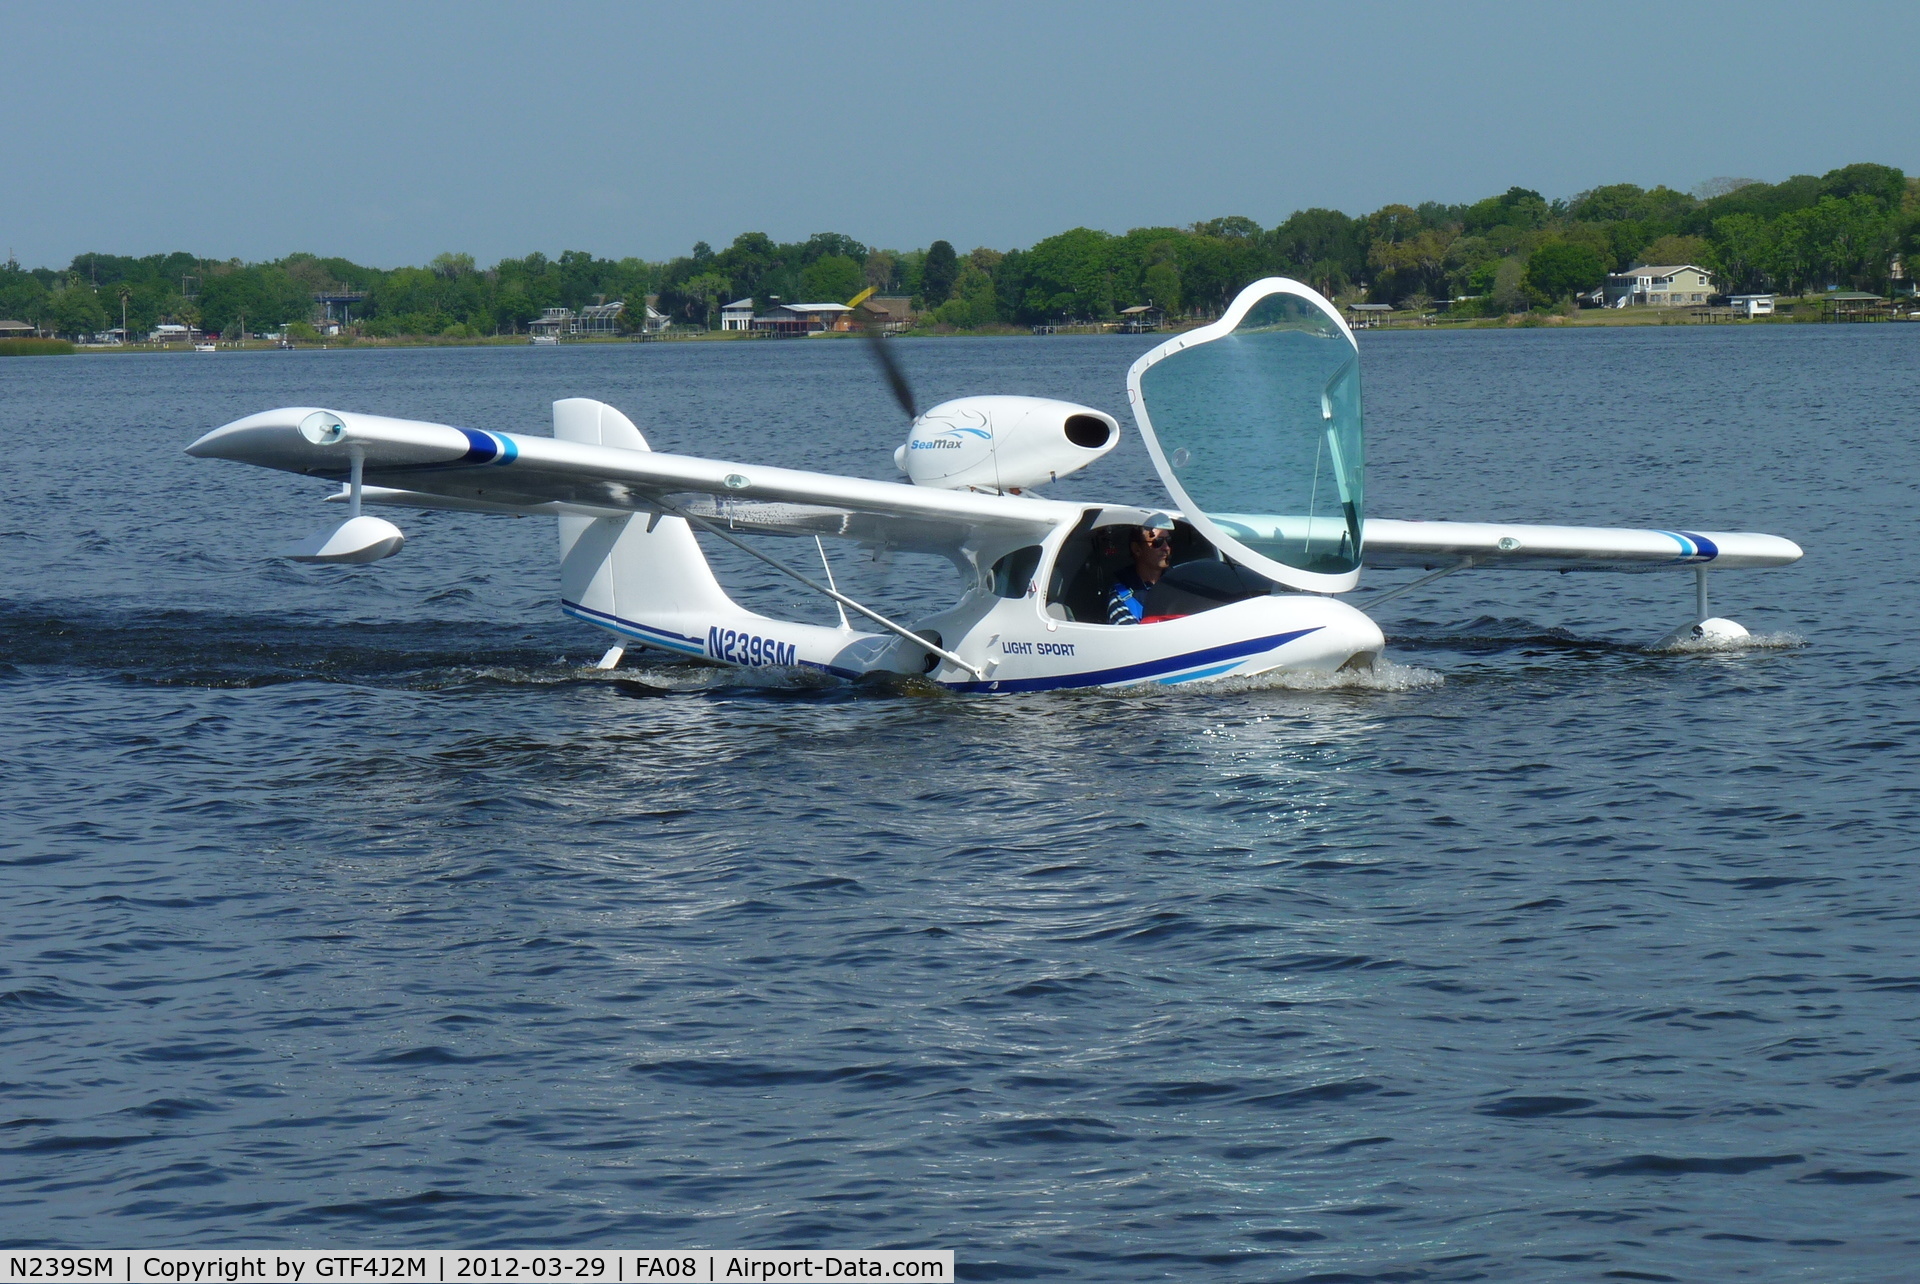 N239SM, 2008 Airmax SeaMax M-22 C/N 65, N239SM at Lake Agnes Splash-in 29.3.12